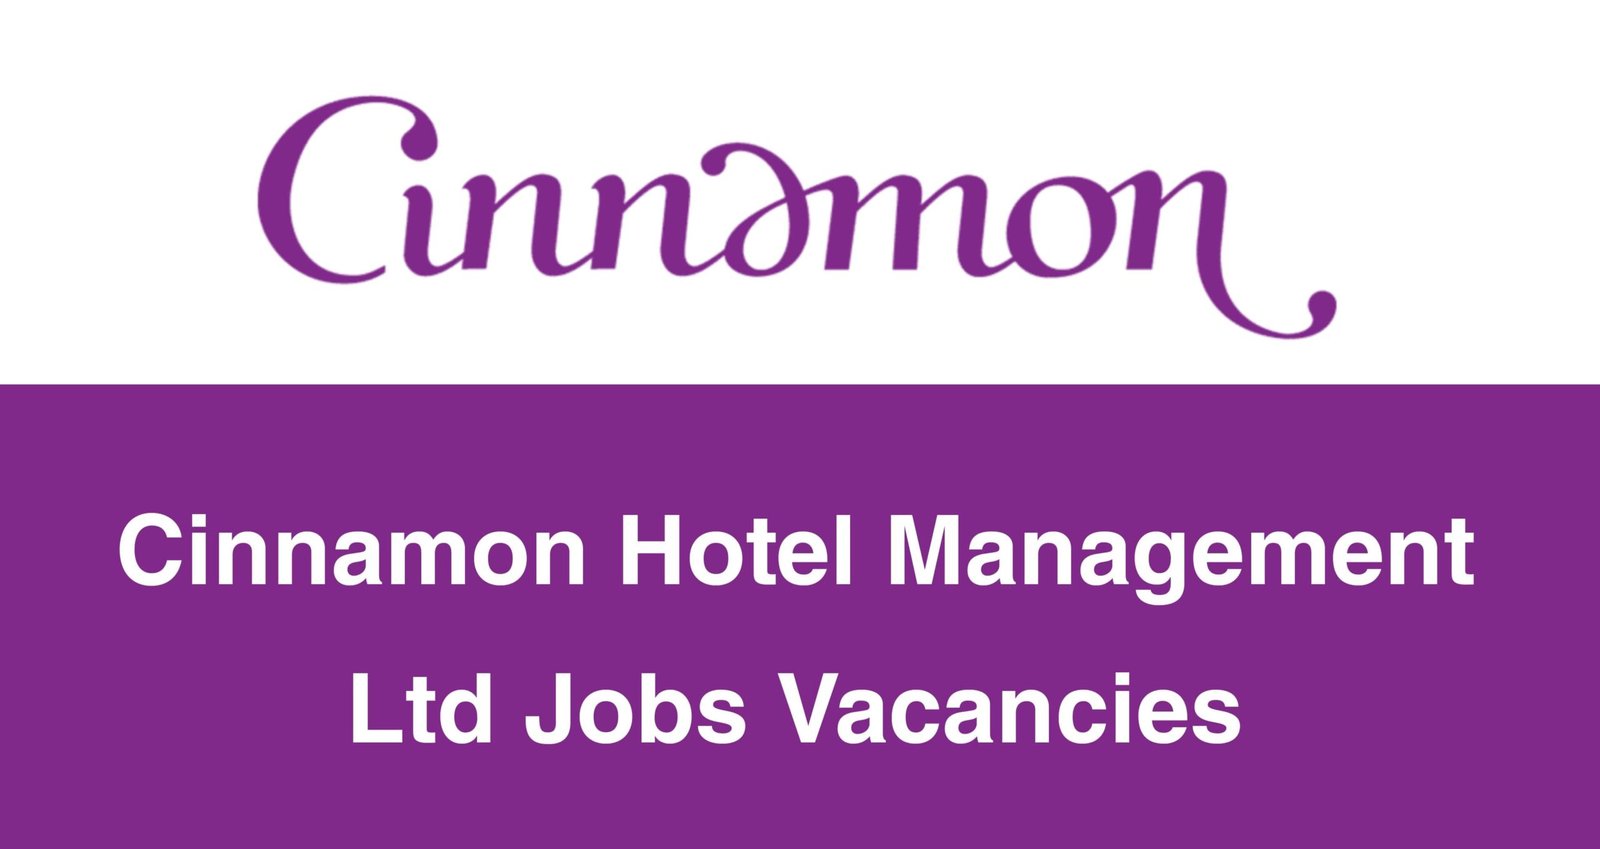 Cinnamon Hotel Management Ltd Jobs Vacancies